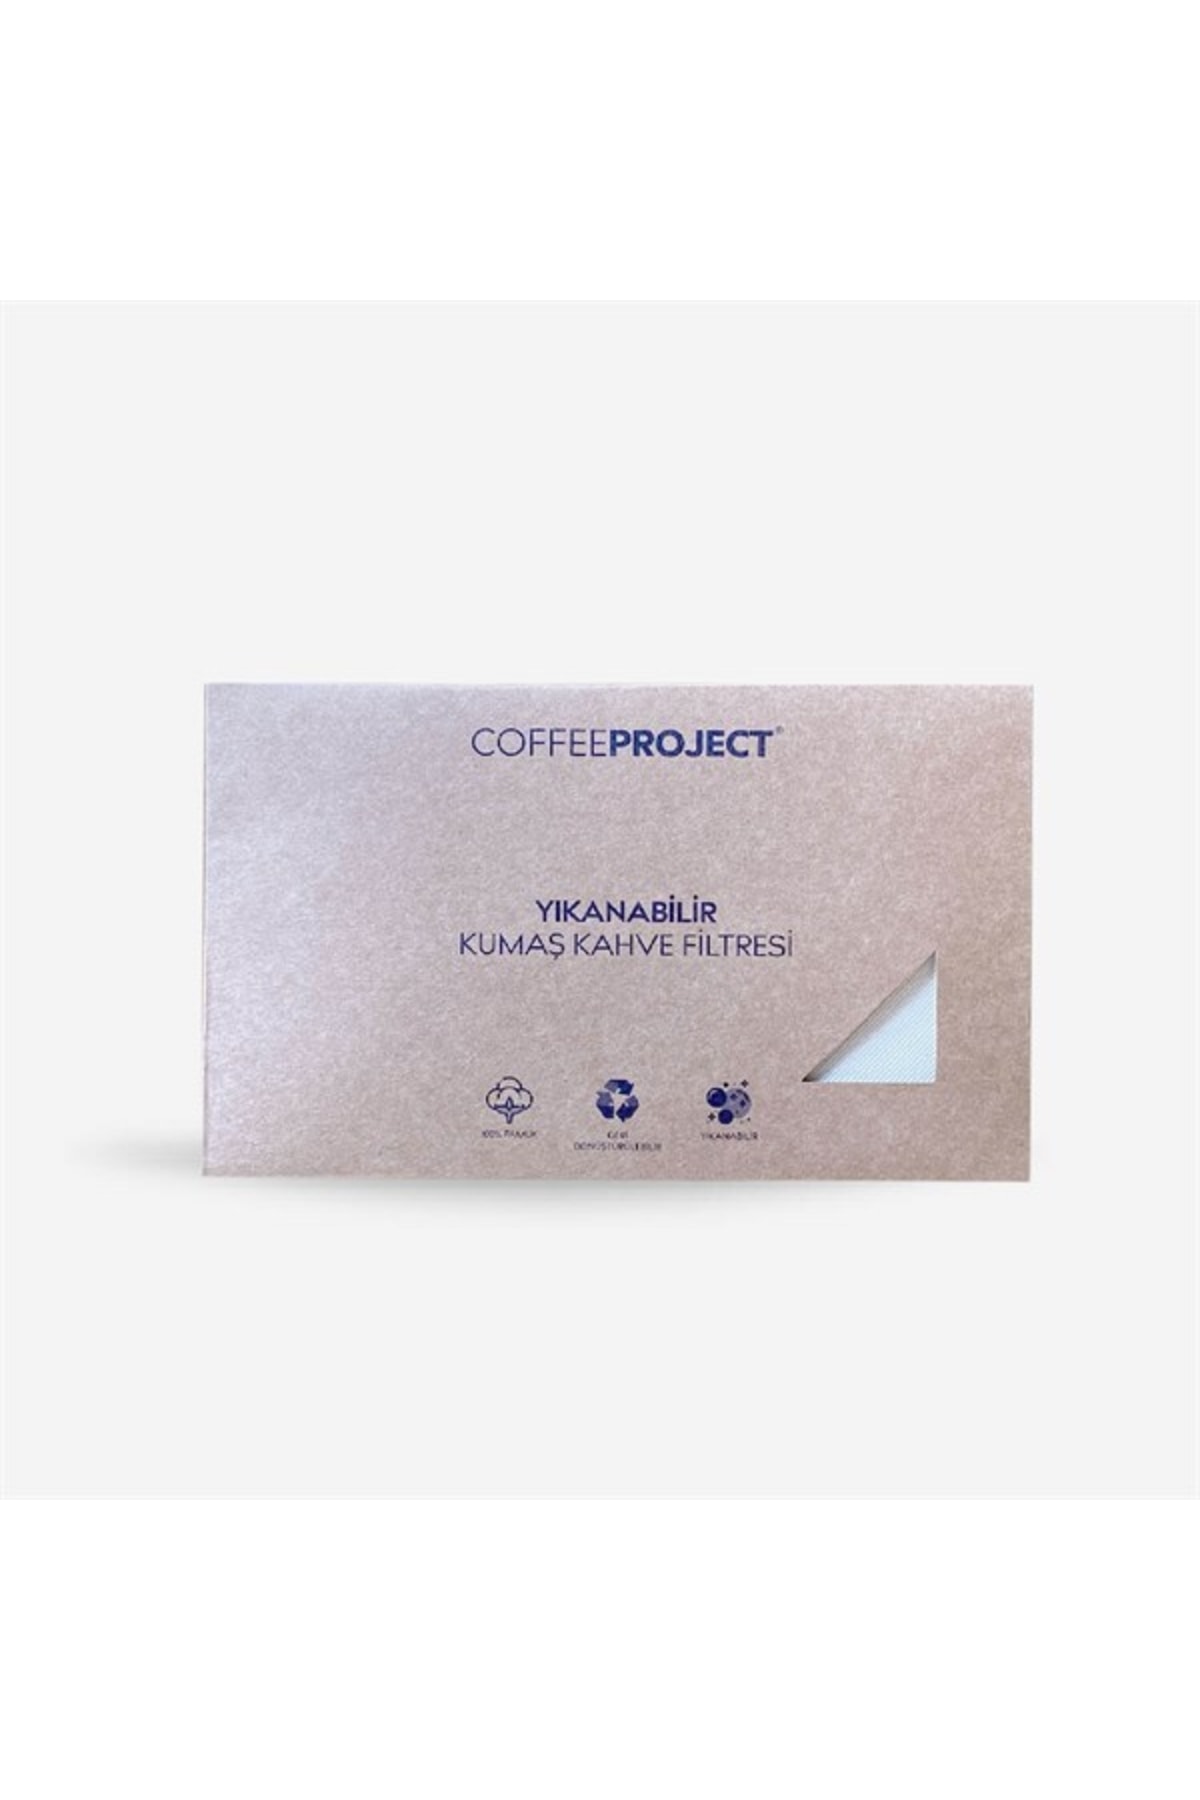 Coffee Project Kumaş Kahve Filtresi [doğal]